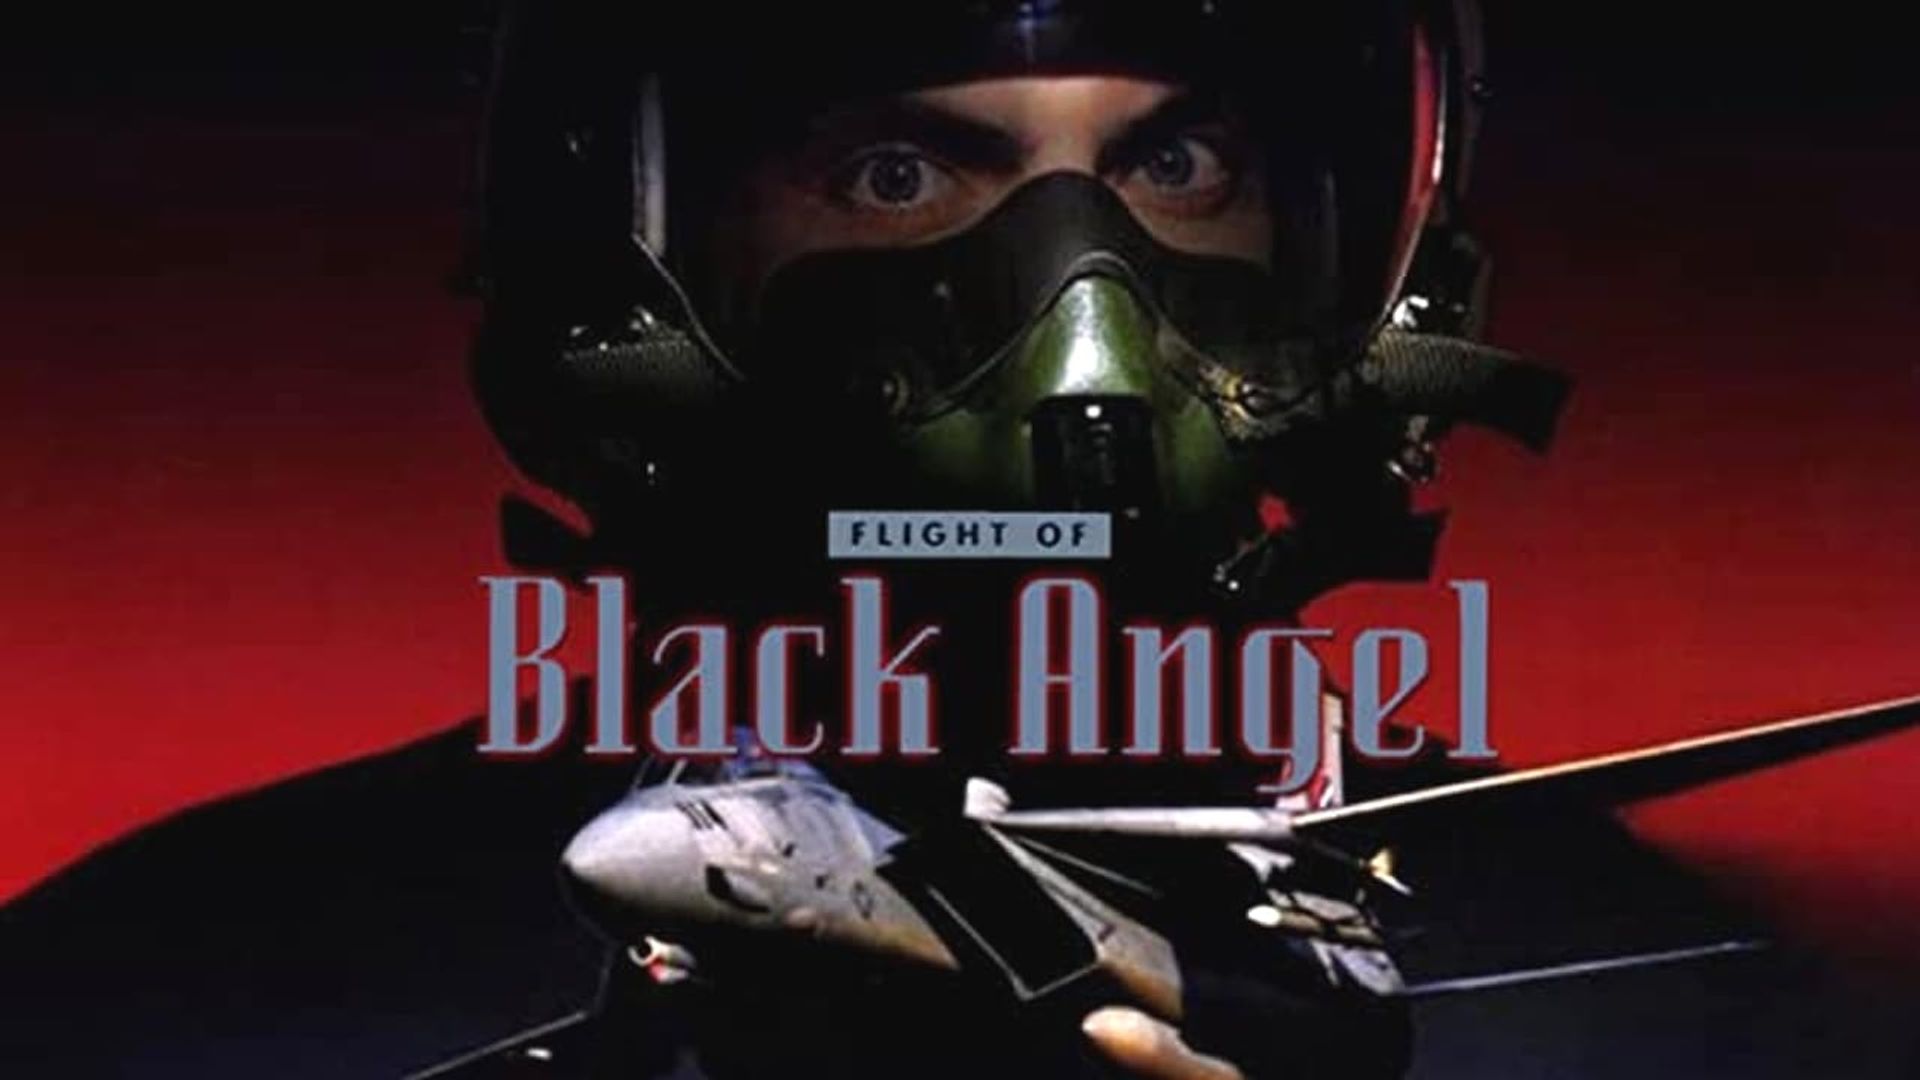 Flight of Black Angel background